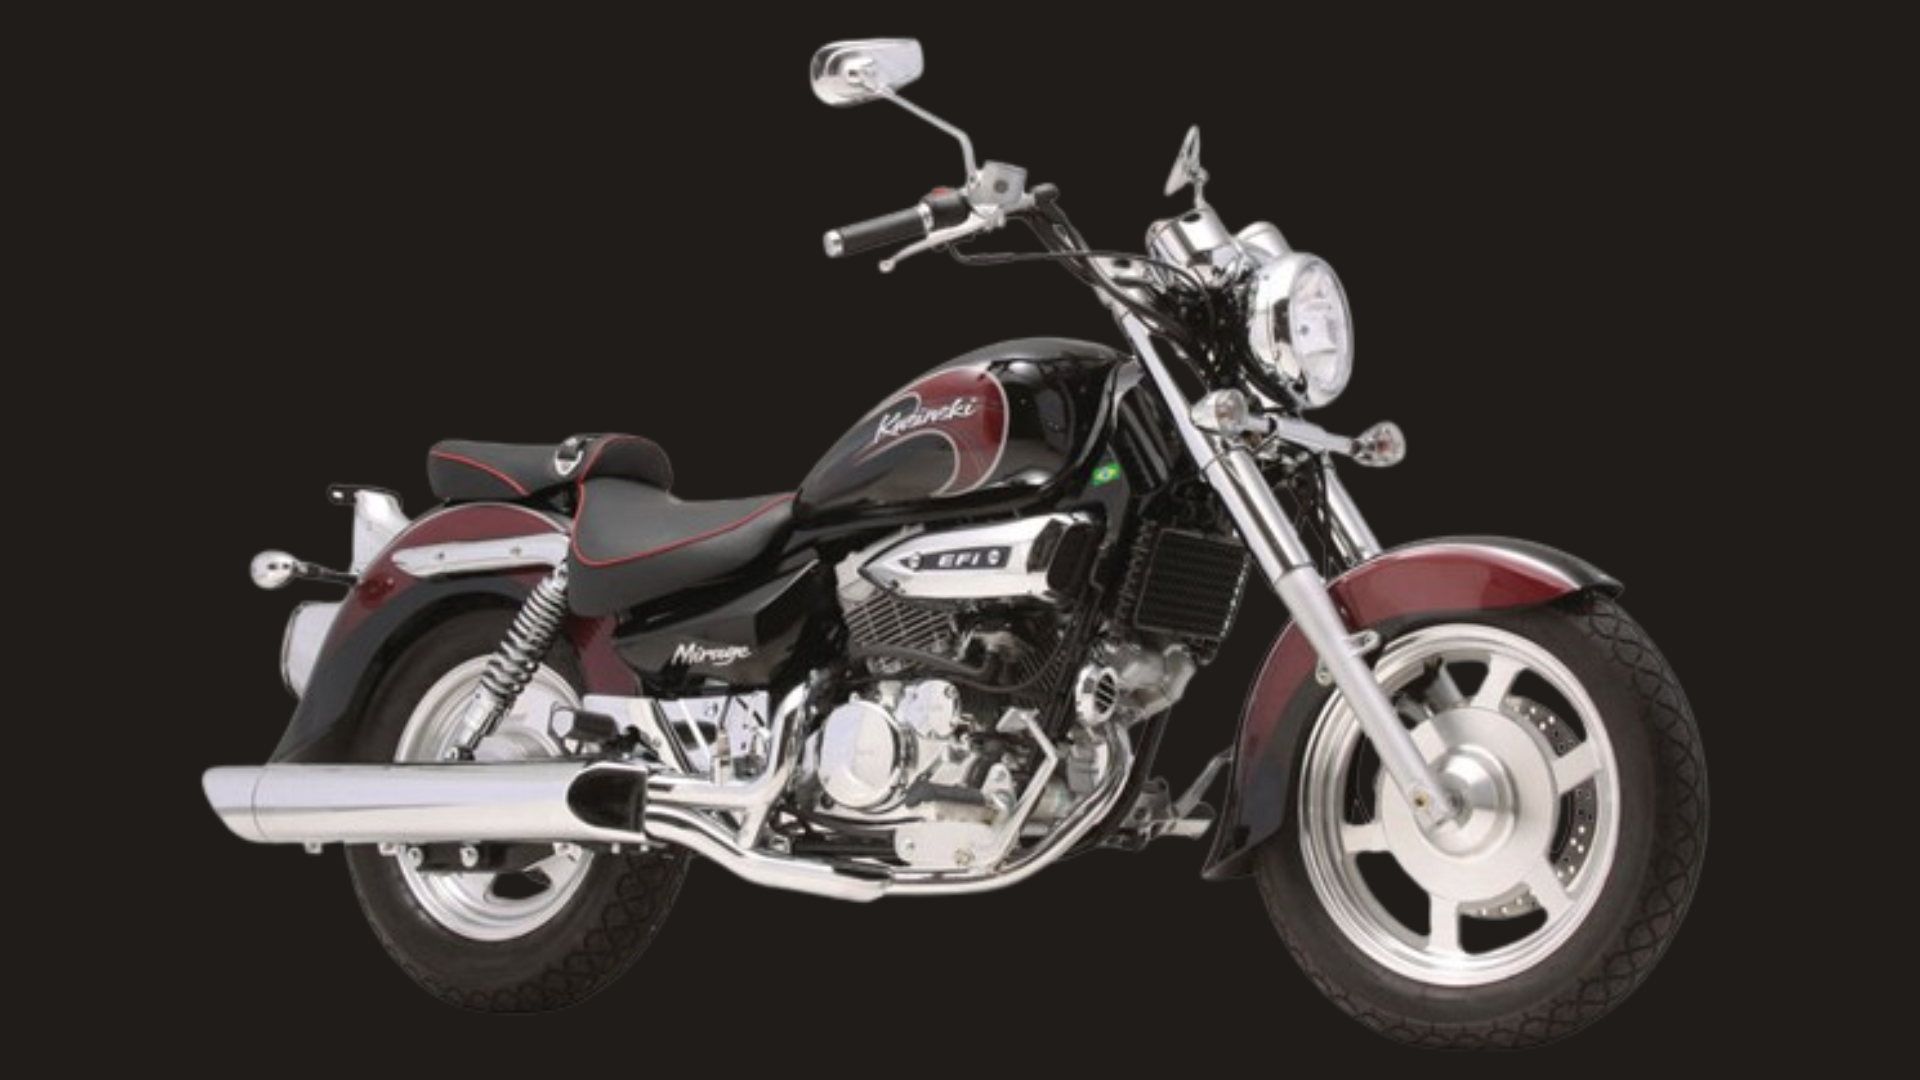 kasinski gv mirage 250 - motos até R$ 10 mil